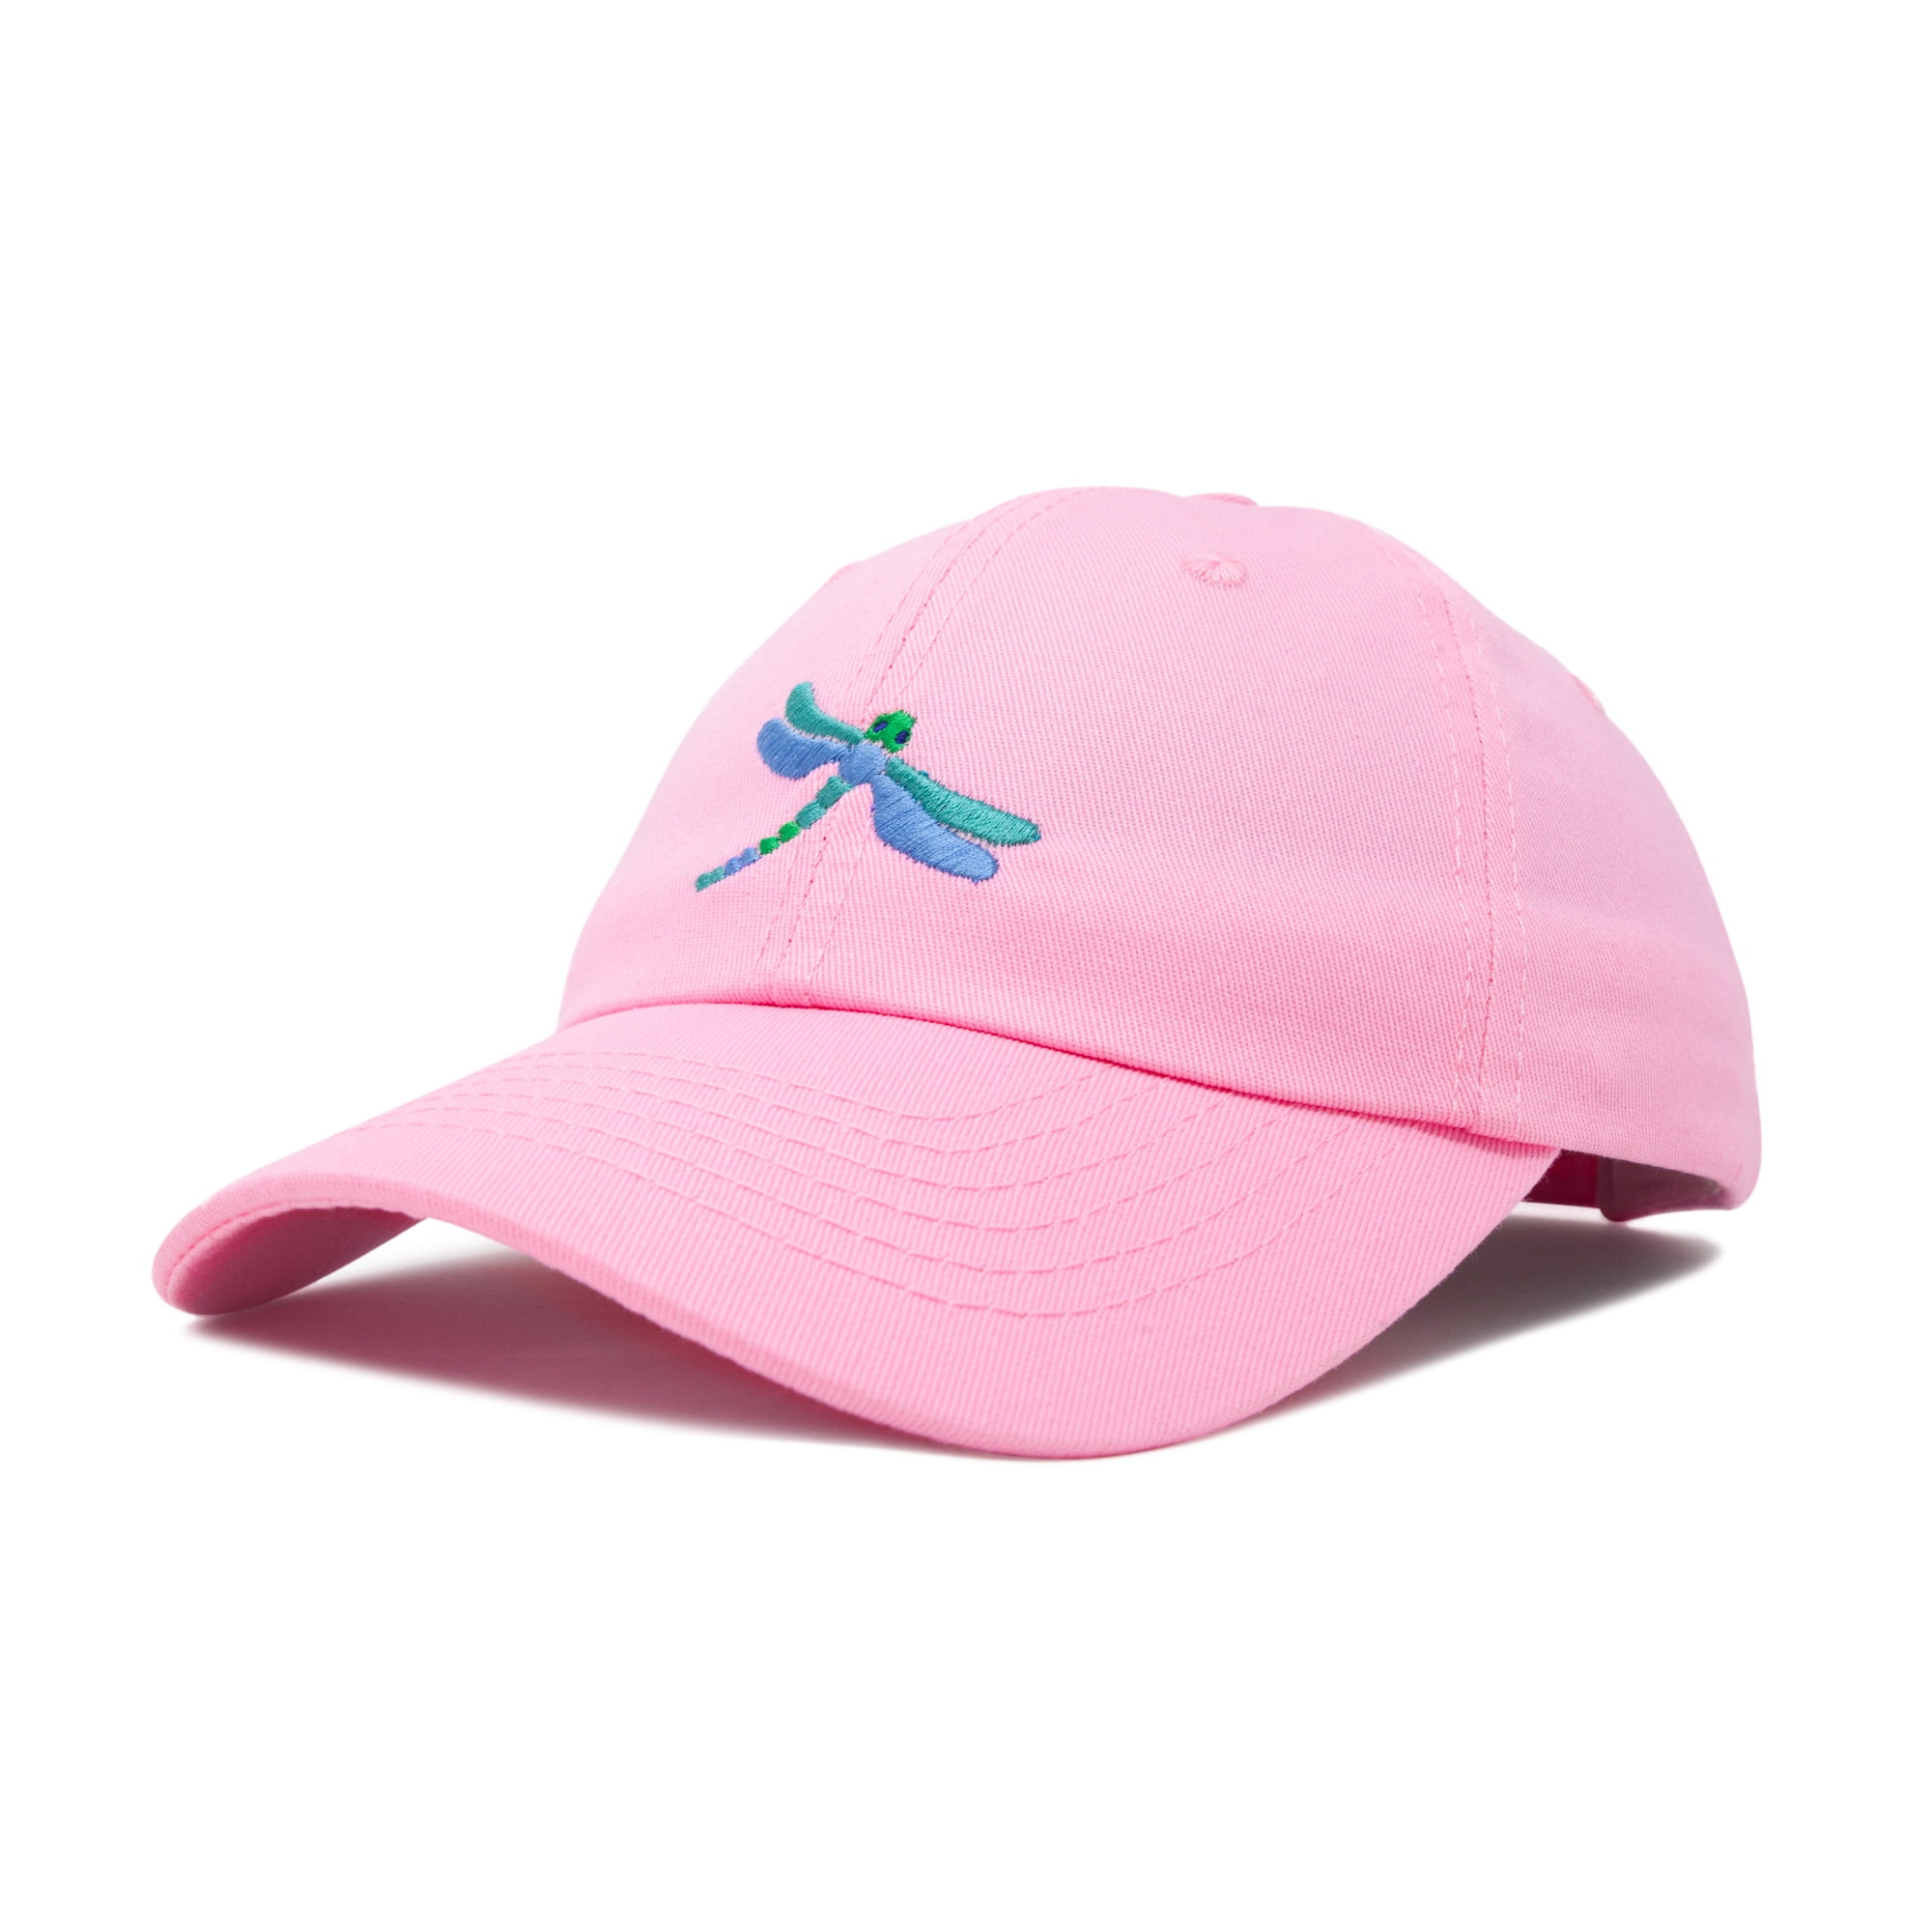 DALIX Dragonfly Womens Baseball Cap Fashion Hat in Light Pink - Walmart.com